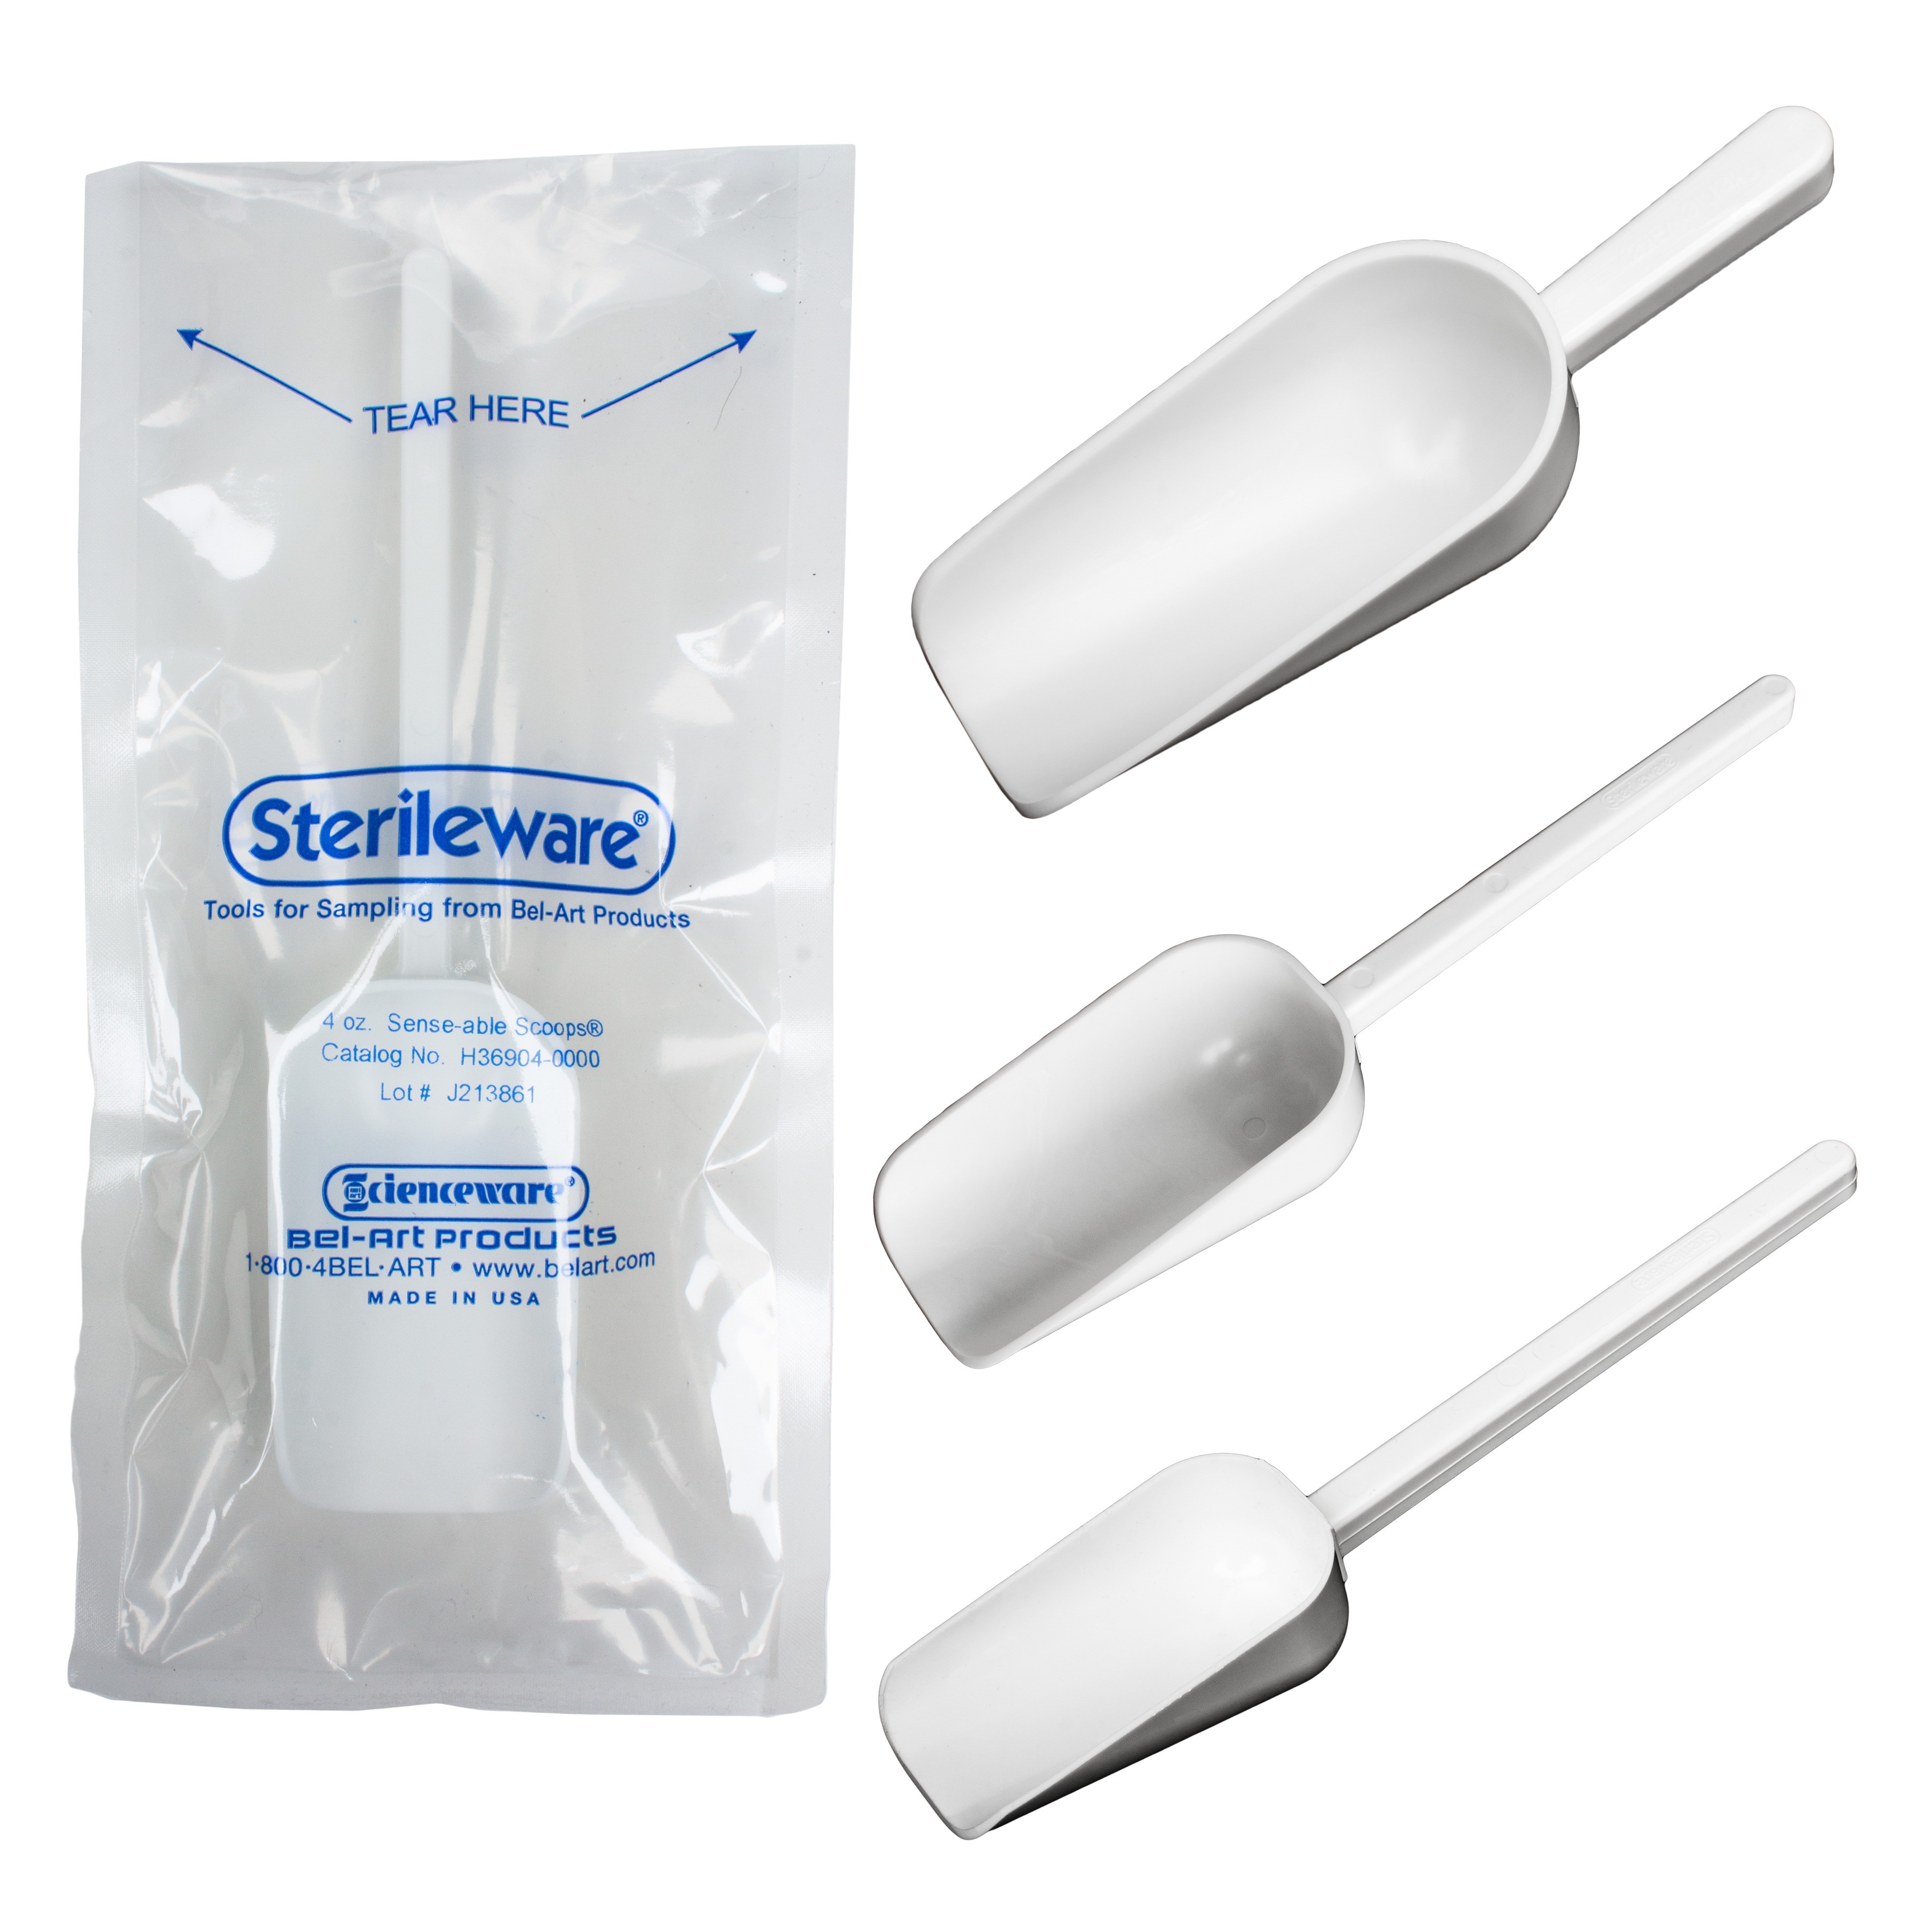 Sterileware Double Bagged Sterile Sampling Scoops - White